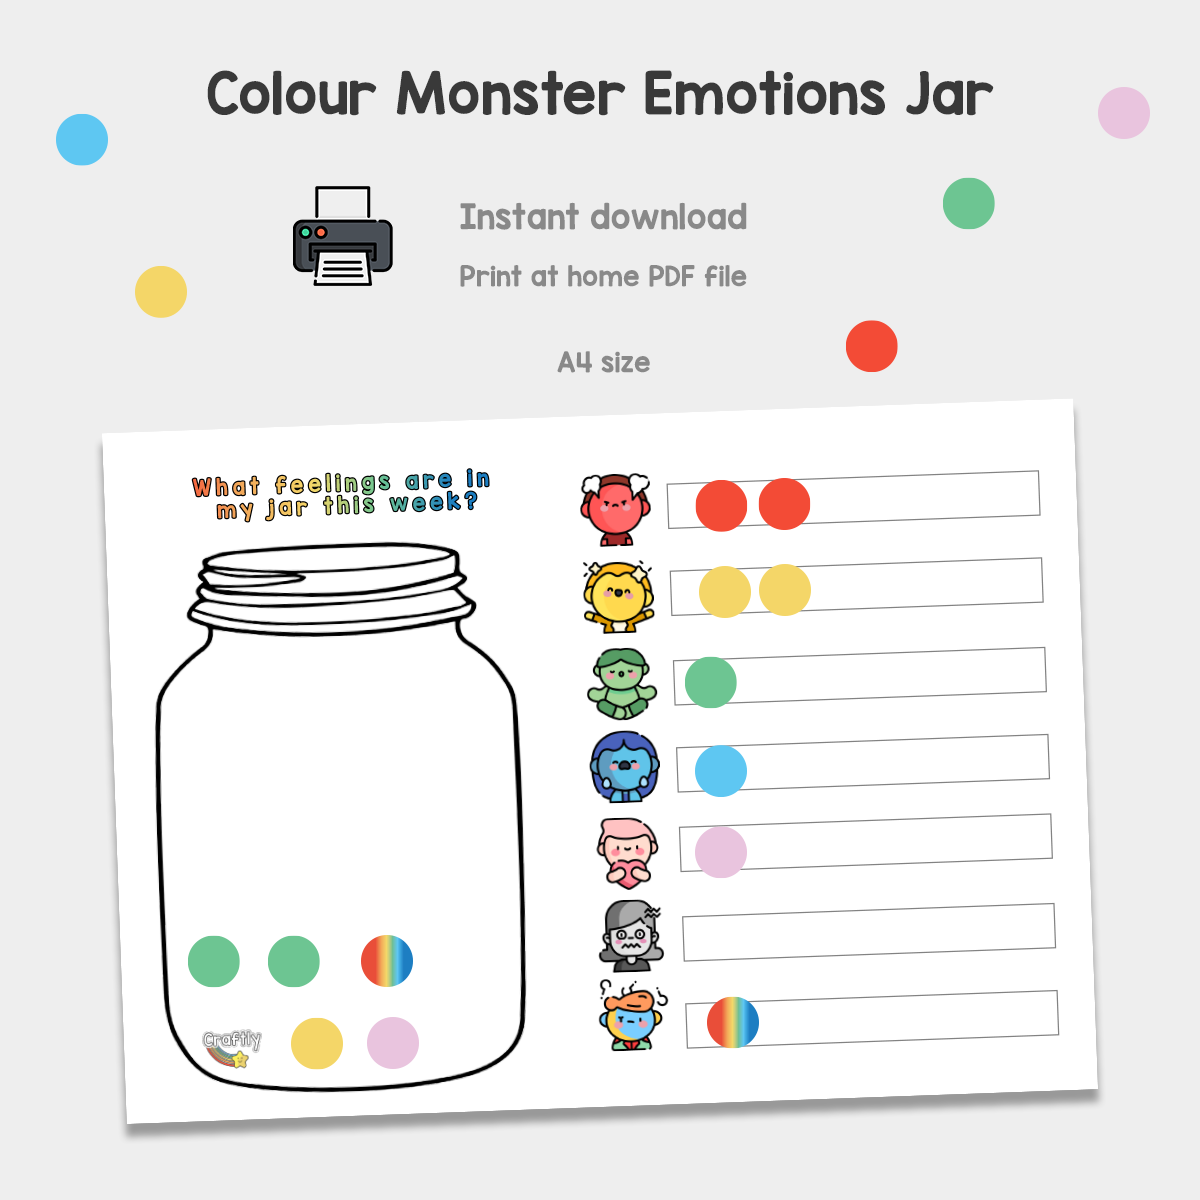 Colour monster emotions jar â